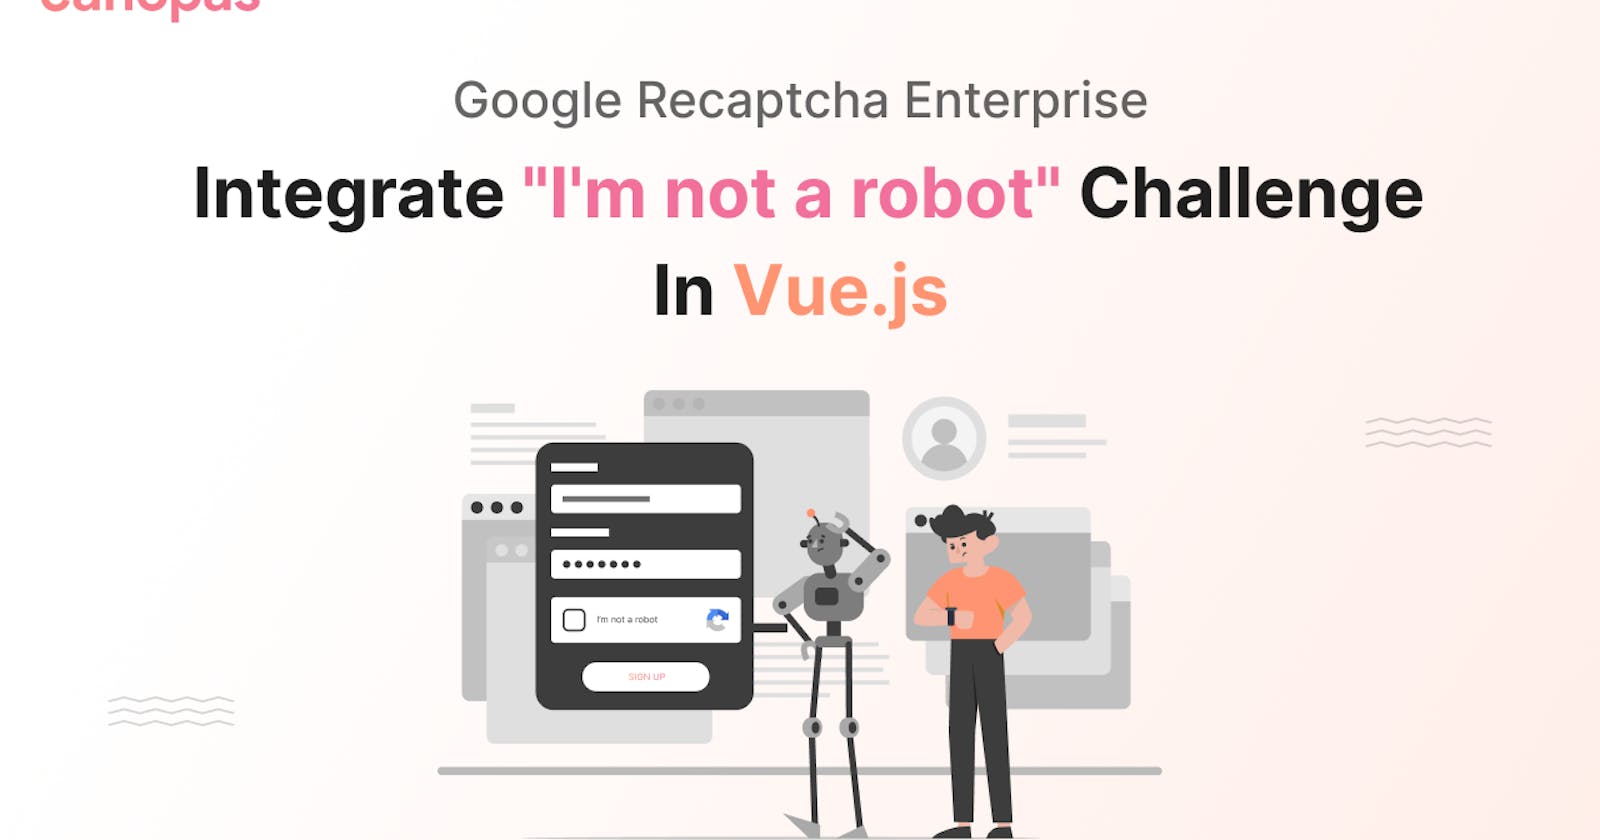 Google reCAPTCHA Enterprise: Integrate the “I’m not a robot” Challenge In Vue.js